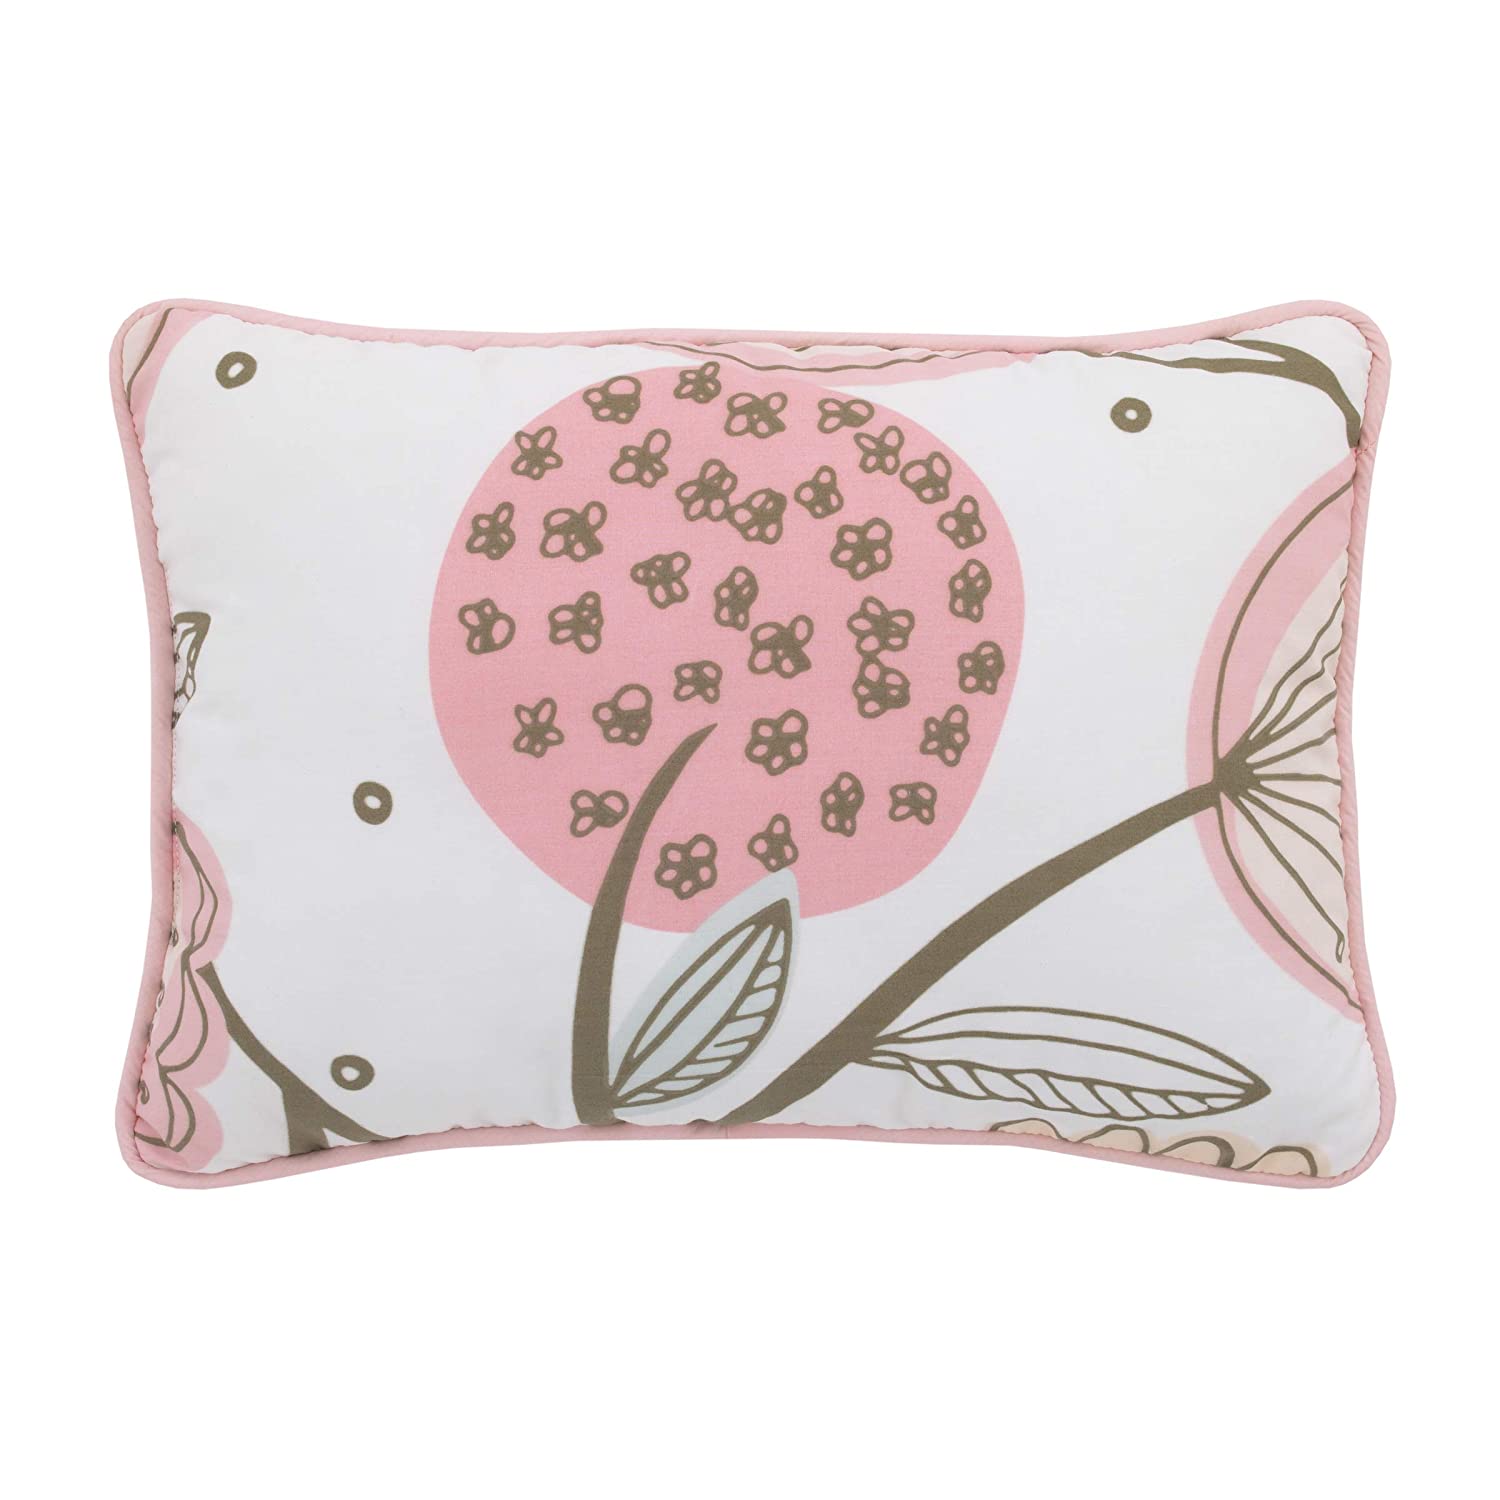 NoJo Beautiful Floral - Pink, Grey, White 10 Piece Crib Nursery Bedding Set